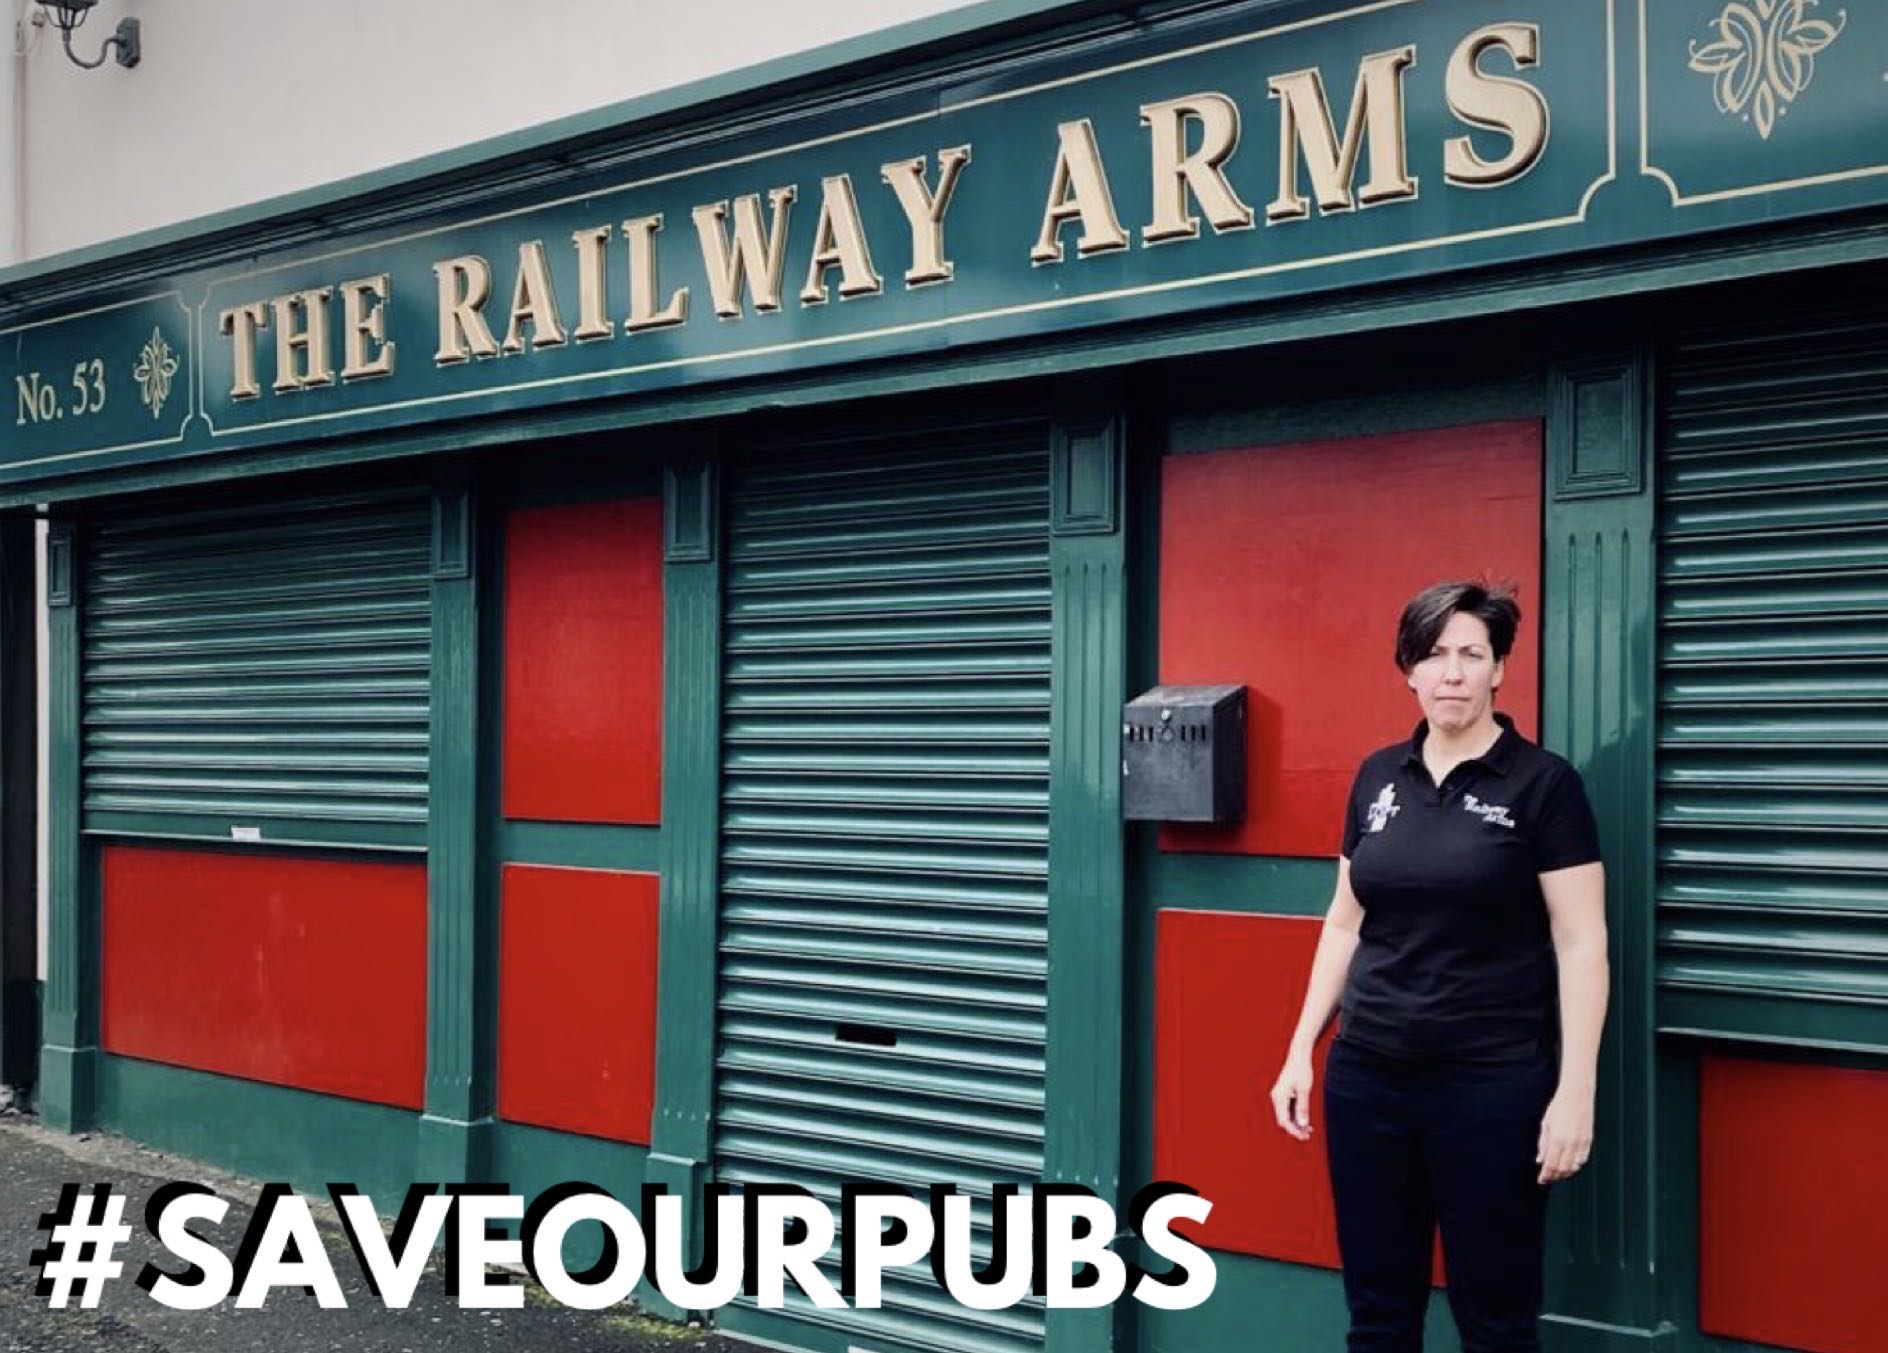 SAVEOURPUBS - The Railway Arms in Coleraine